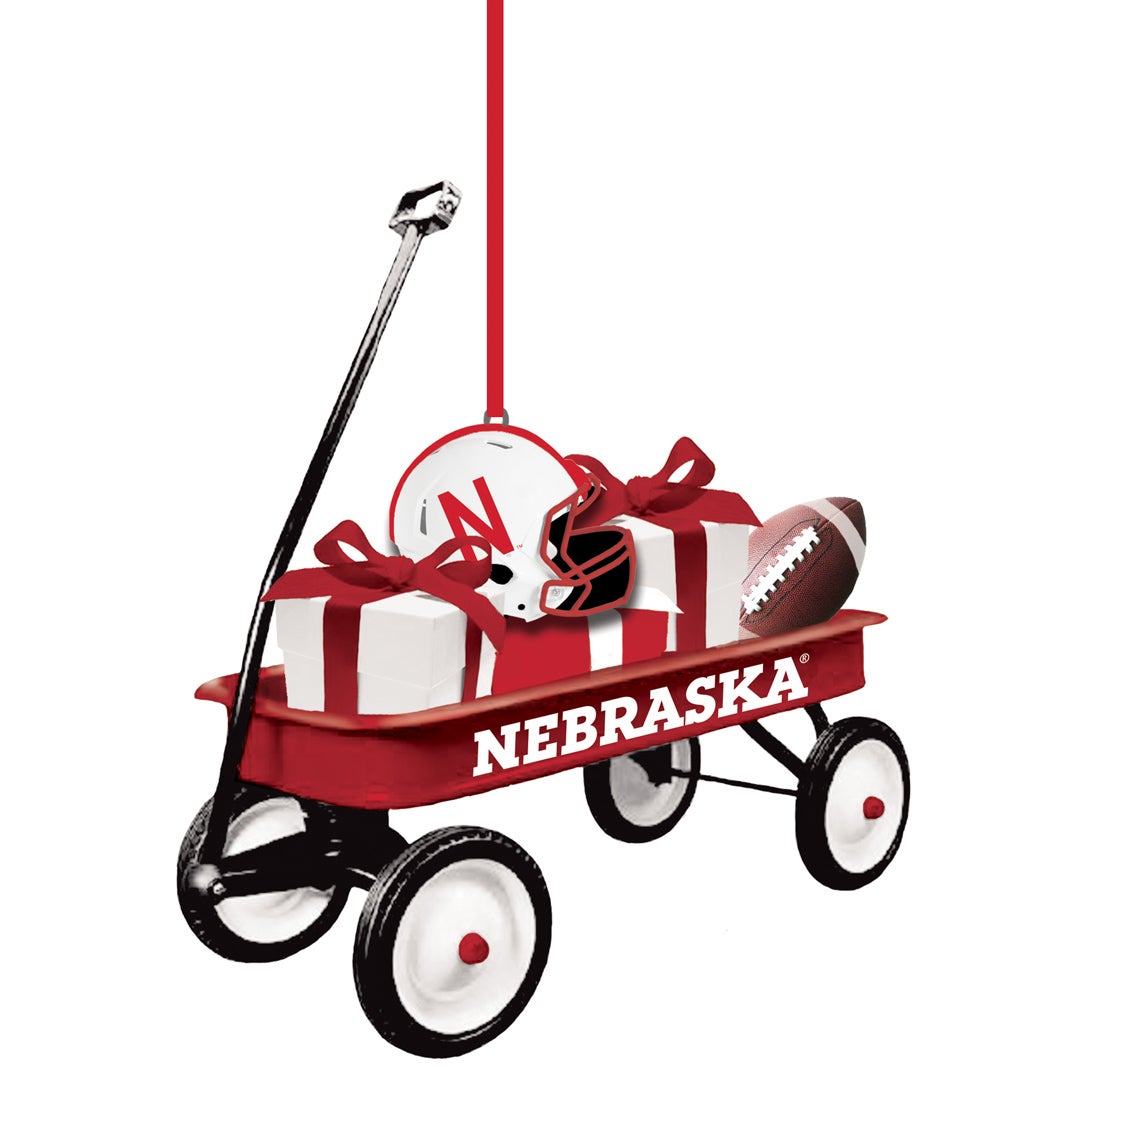 University of Nebraska Team Wagon Ornament